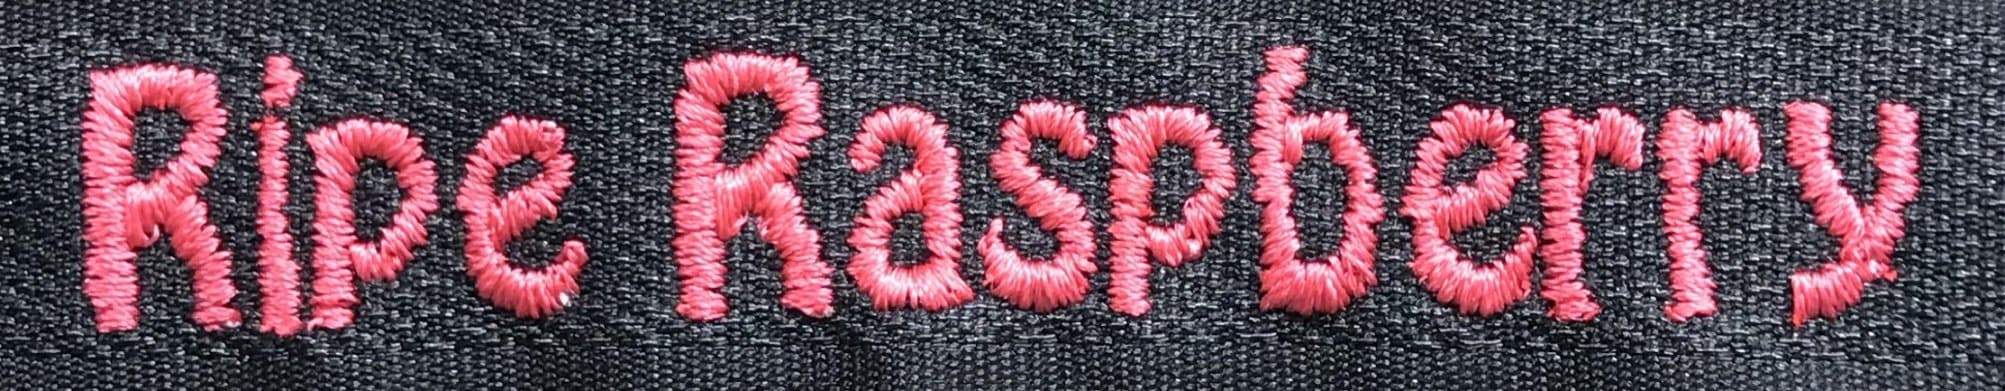 ripe raspberry embroidery sample